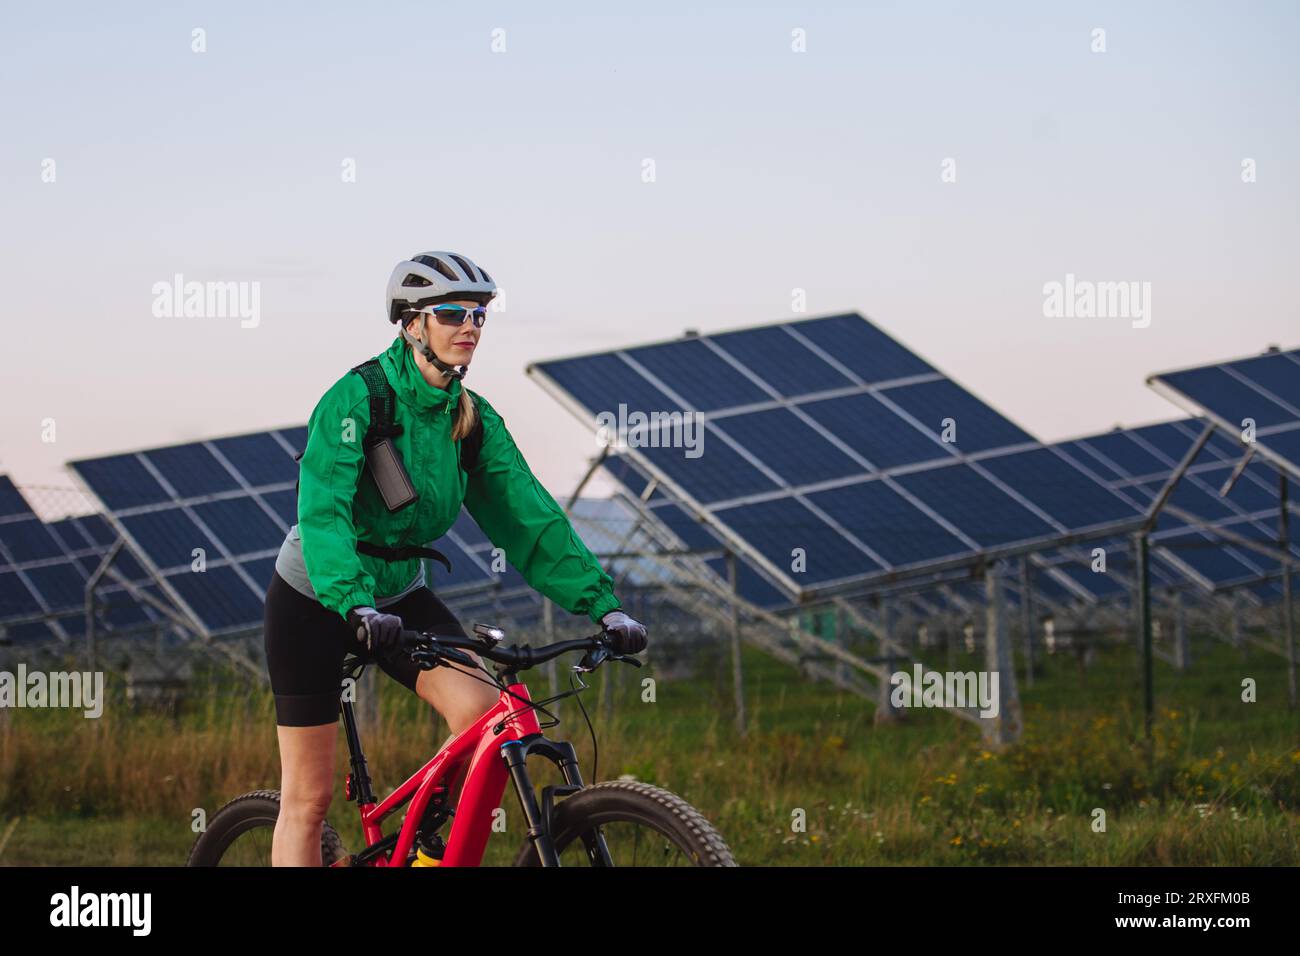 https://c8.alamy.com/comp/2RXFM0B/portrait-of-a-beautiful-cyclist-riding-in-front-of-solar-panels-at-a-solar-farm-2RXFM0B.jpg